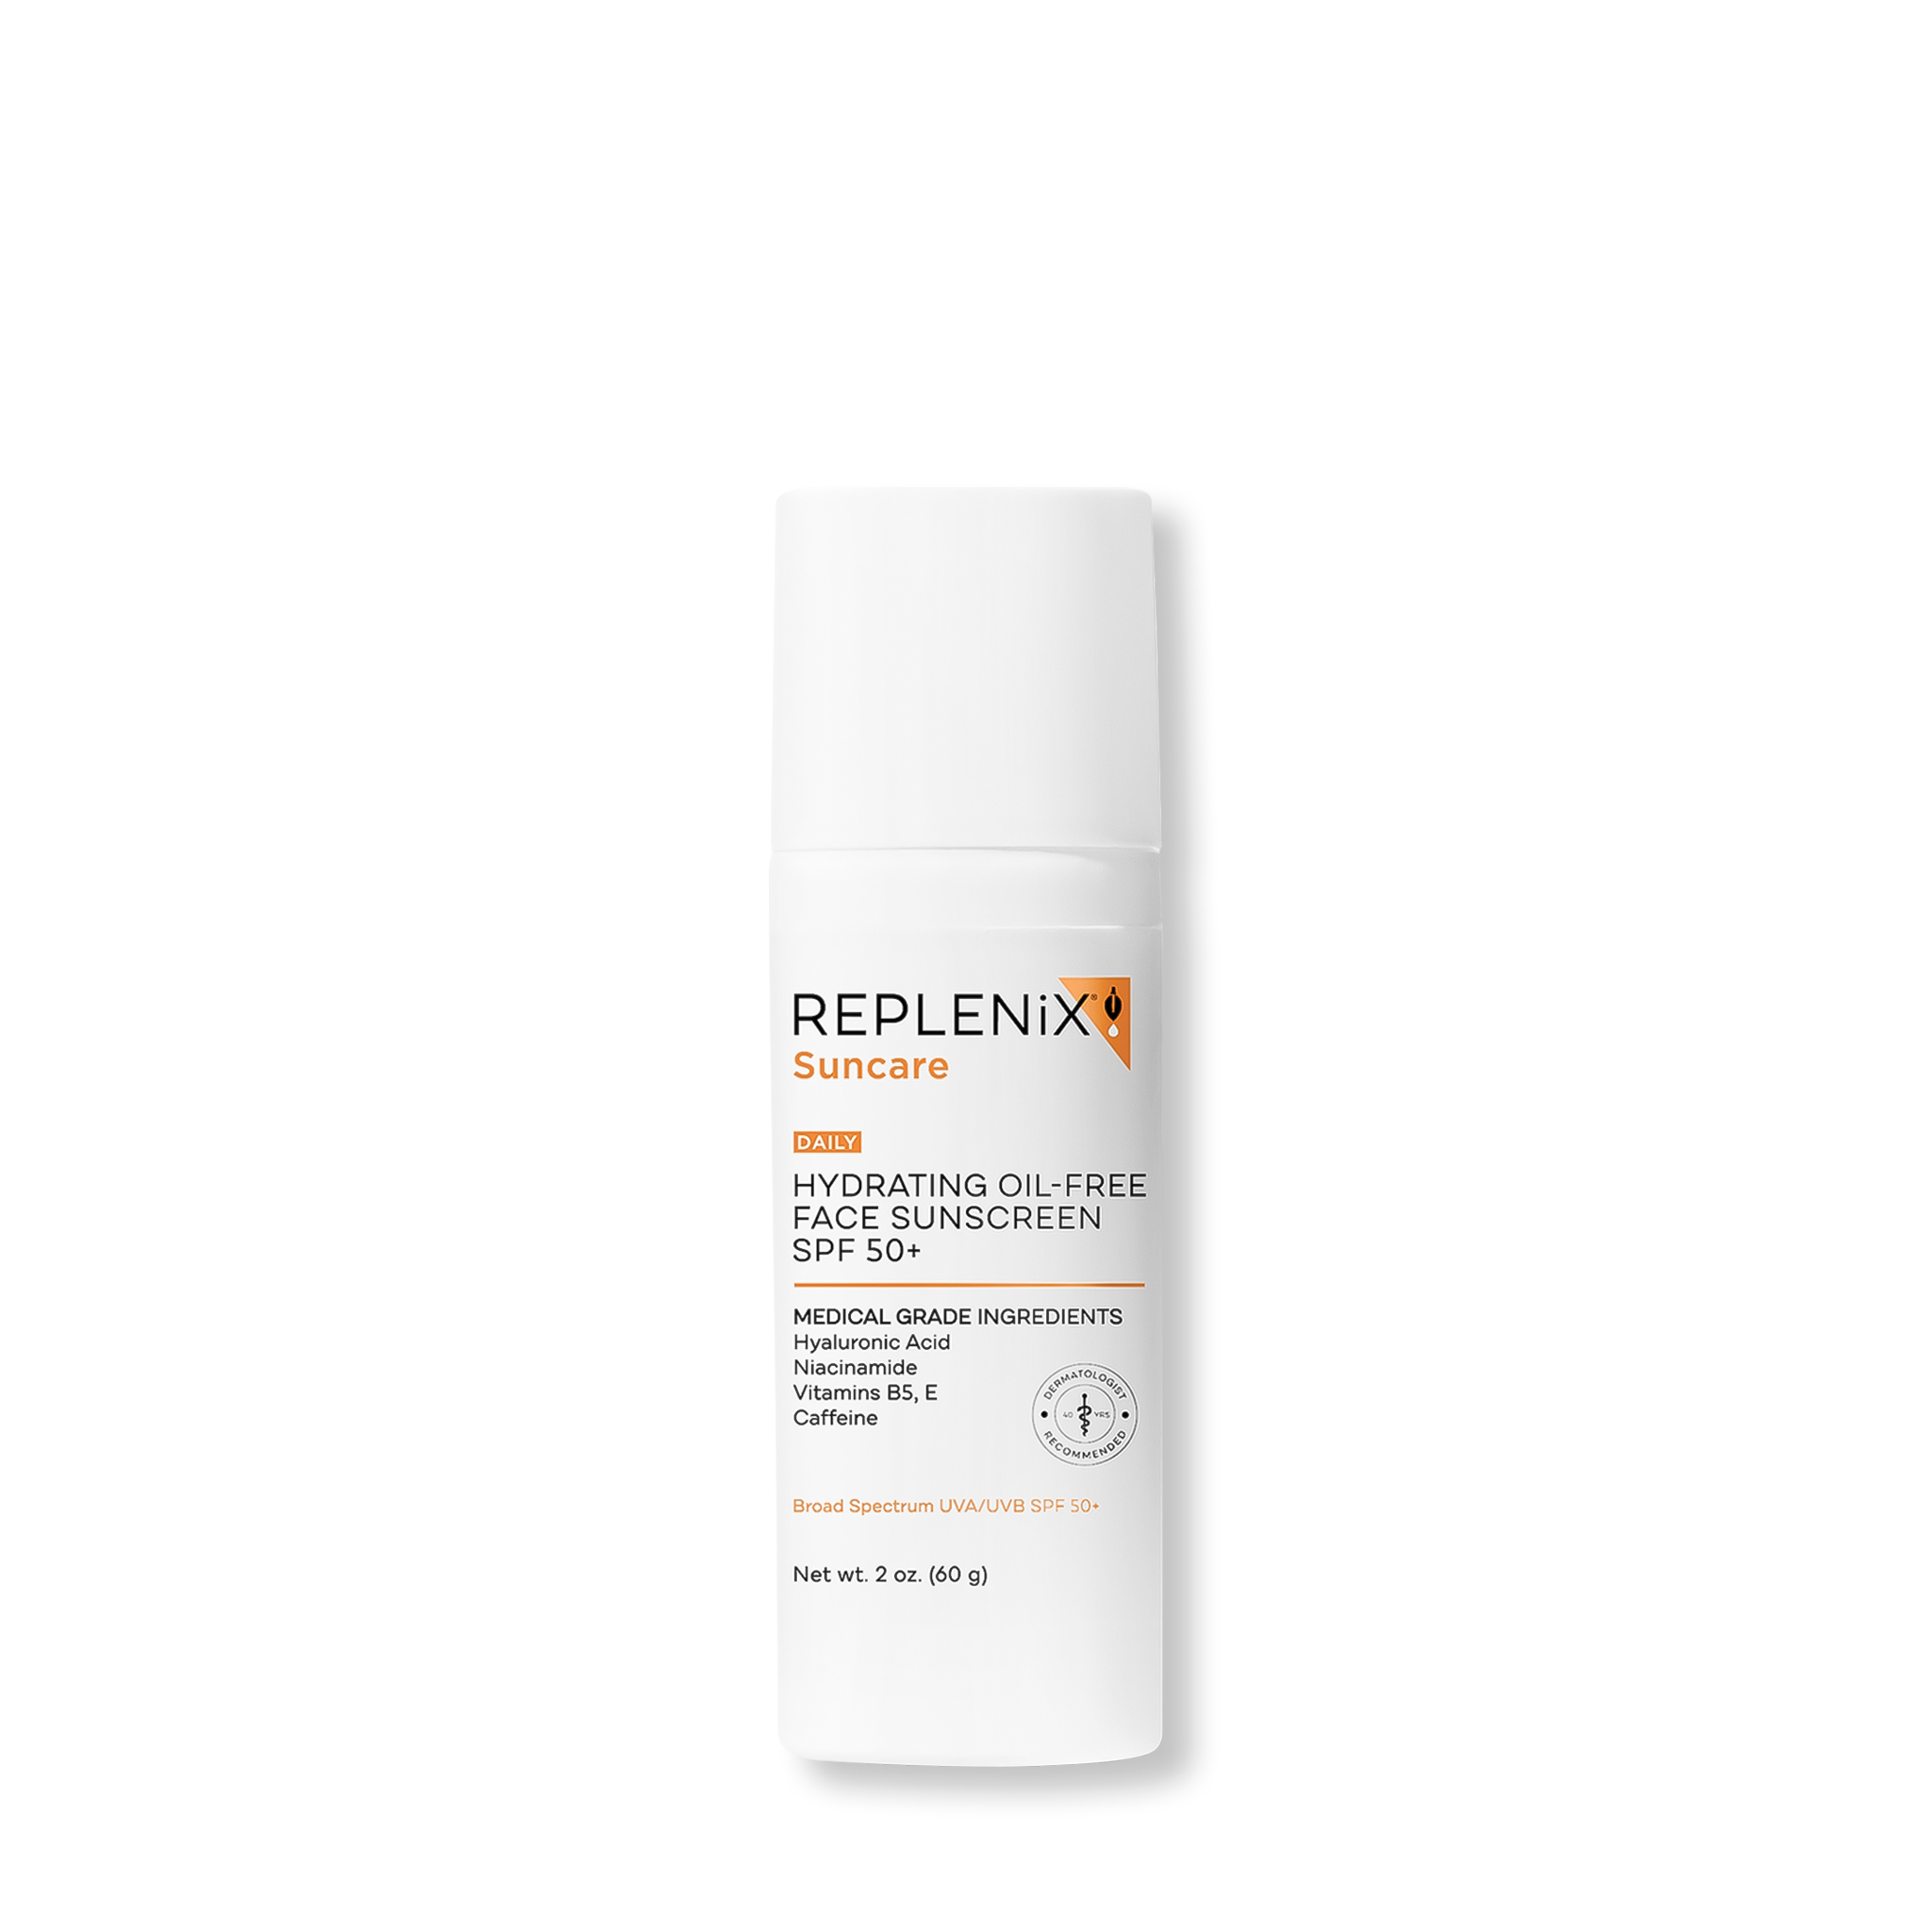 Replenix Hydrating Oil-free Face Sunscreen SPF 50+